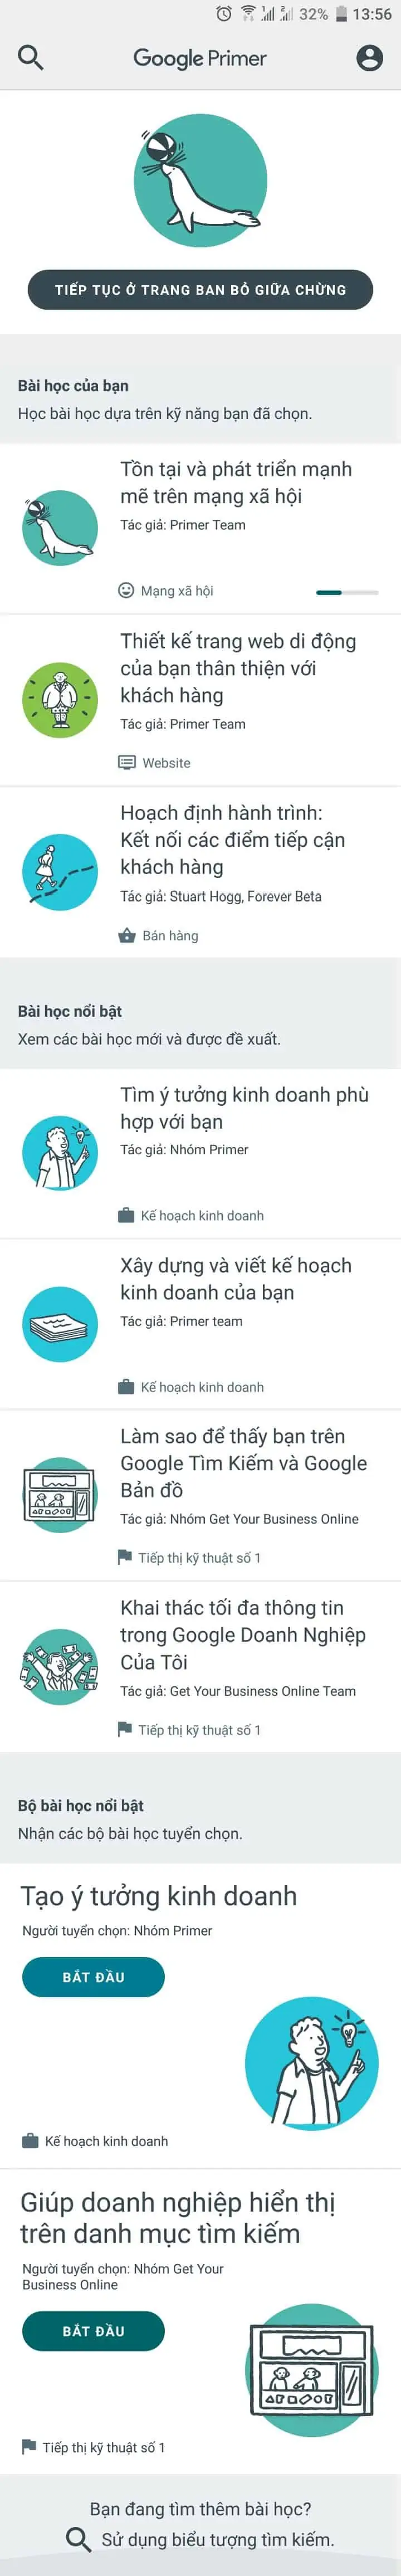 Giao diện Google Primer